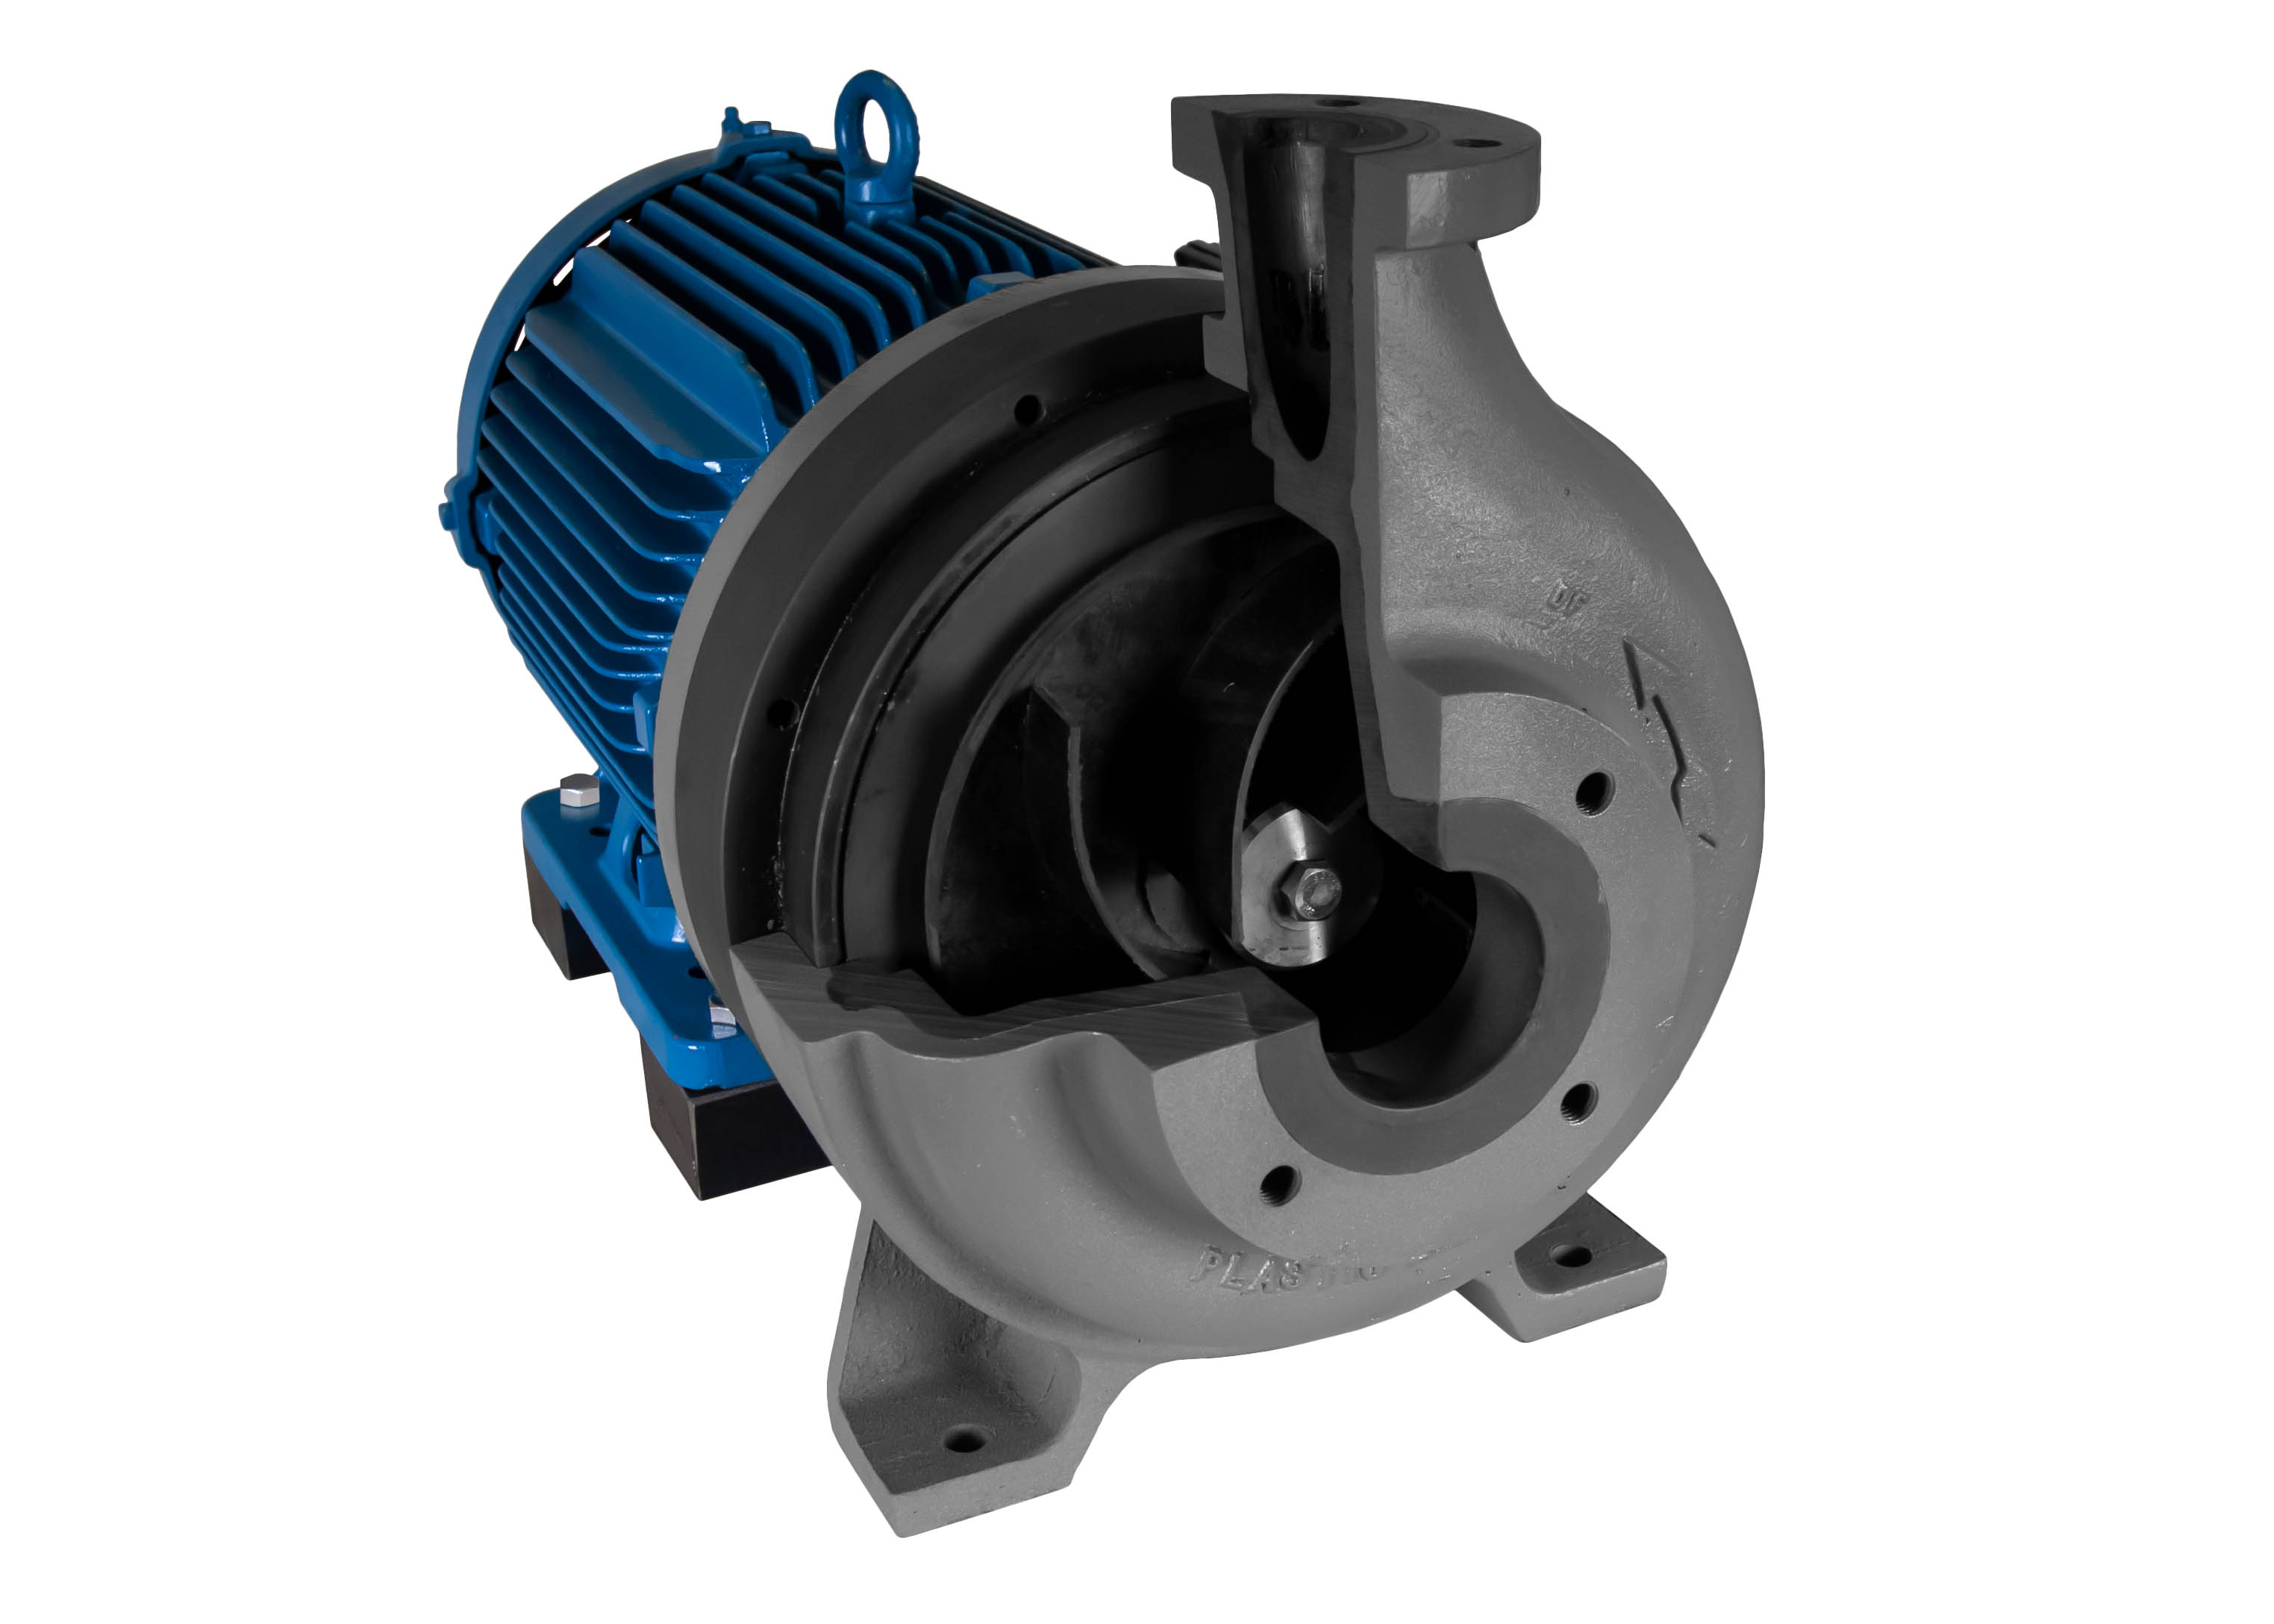 C-Shell 3x2-10 펌프 컷 어웨이 (파란색 WEG 모터 포함) 왼쪽 각도보기